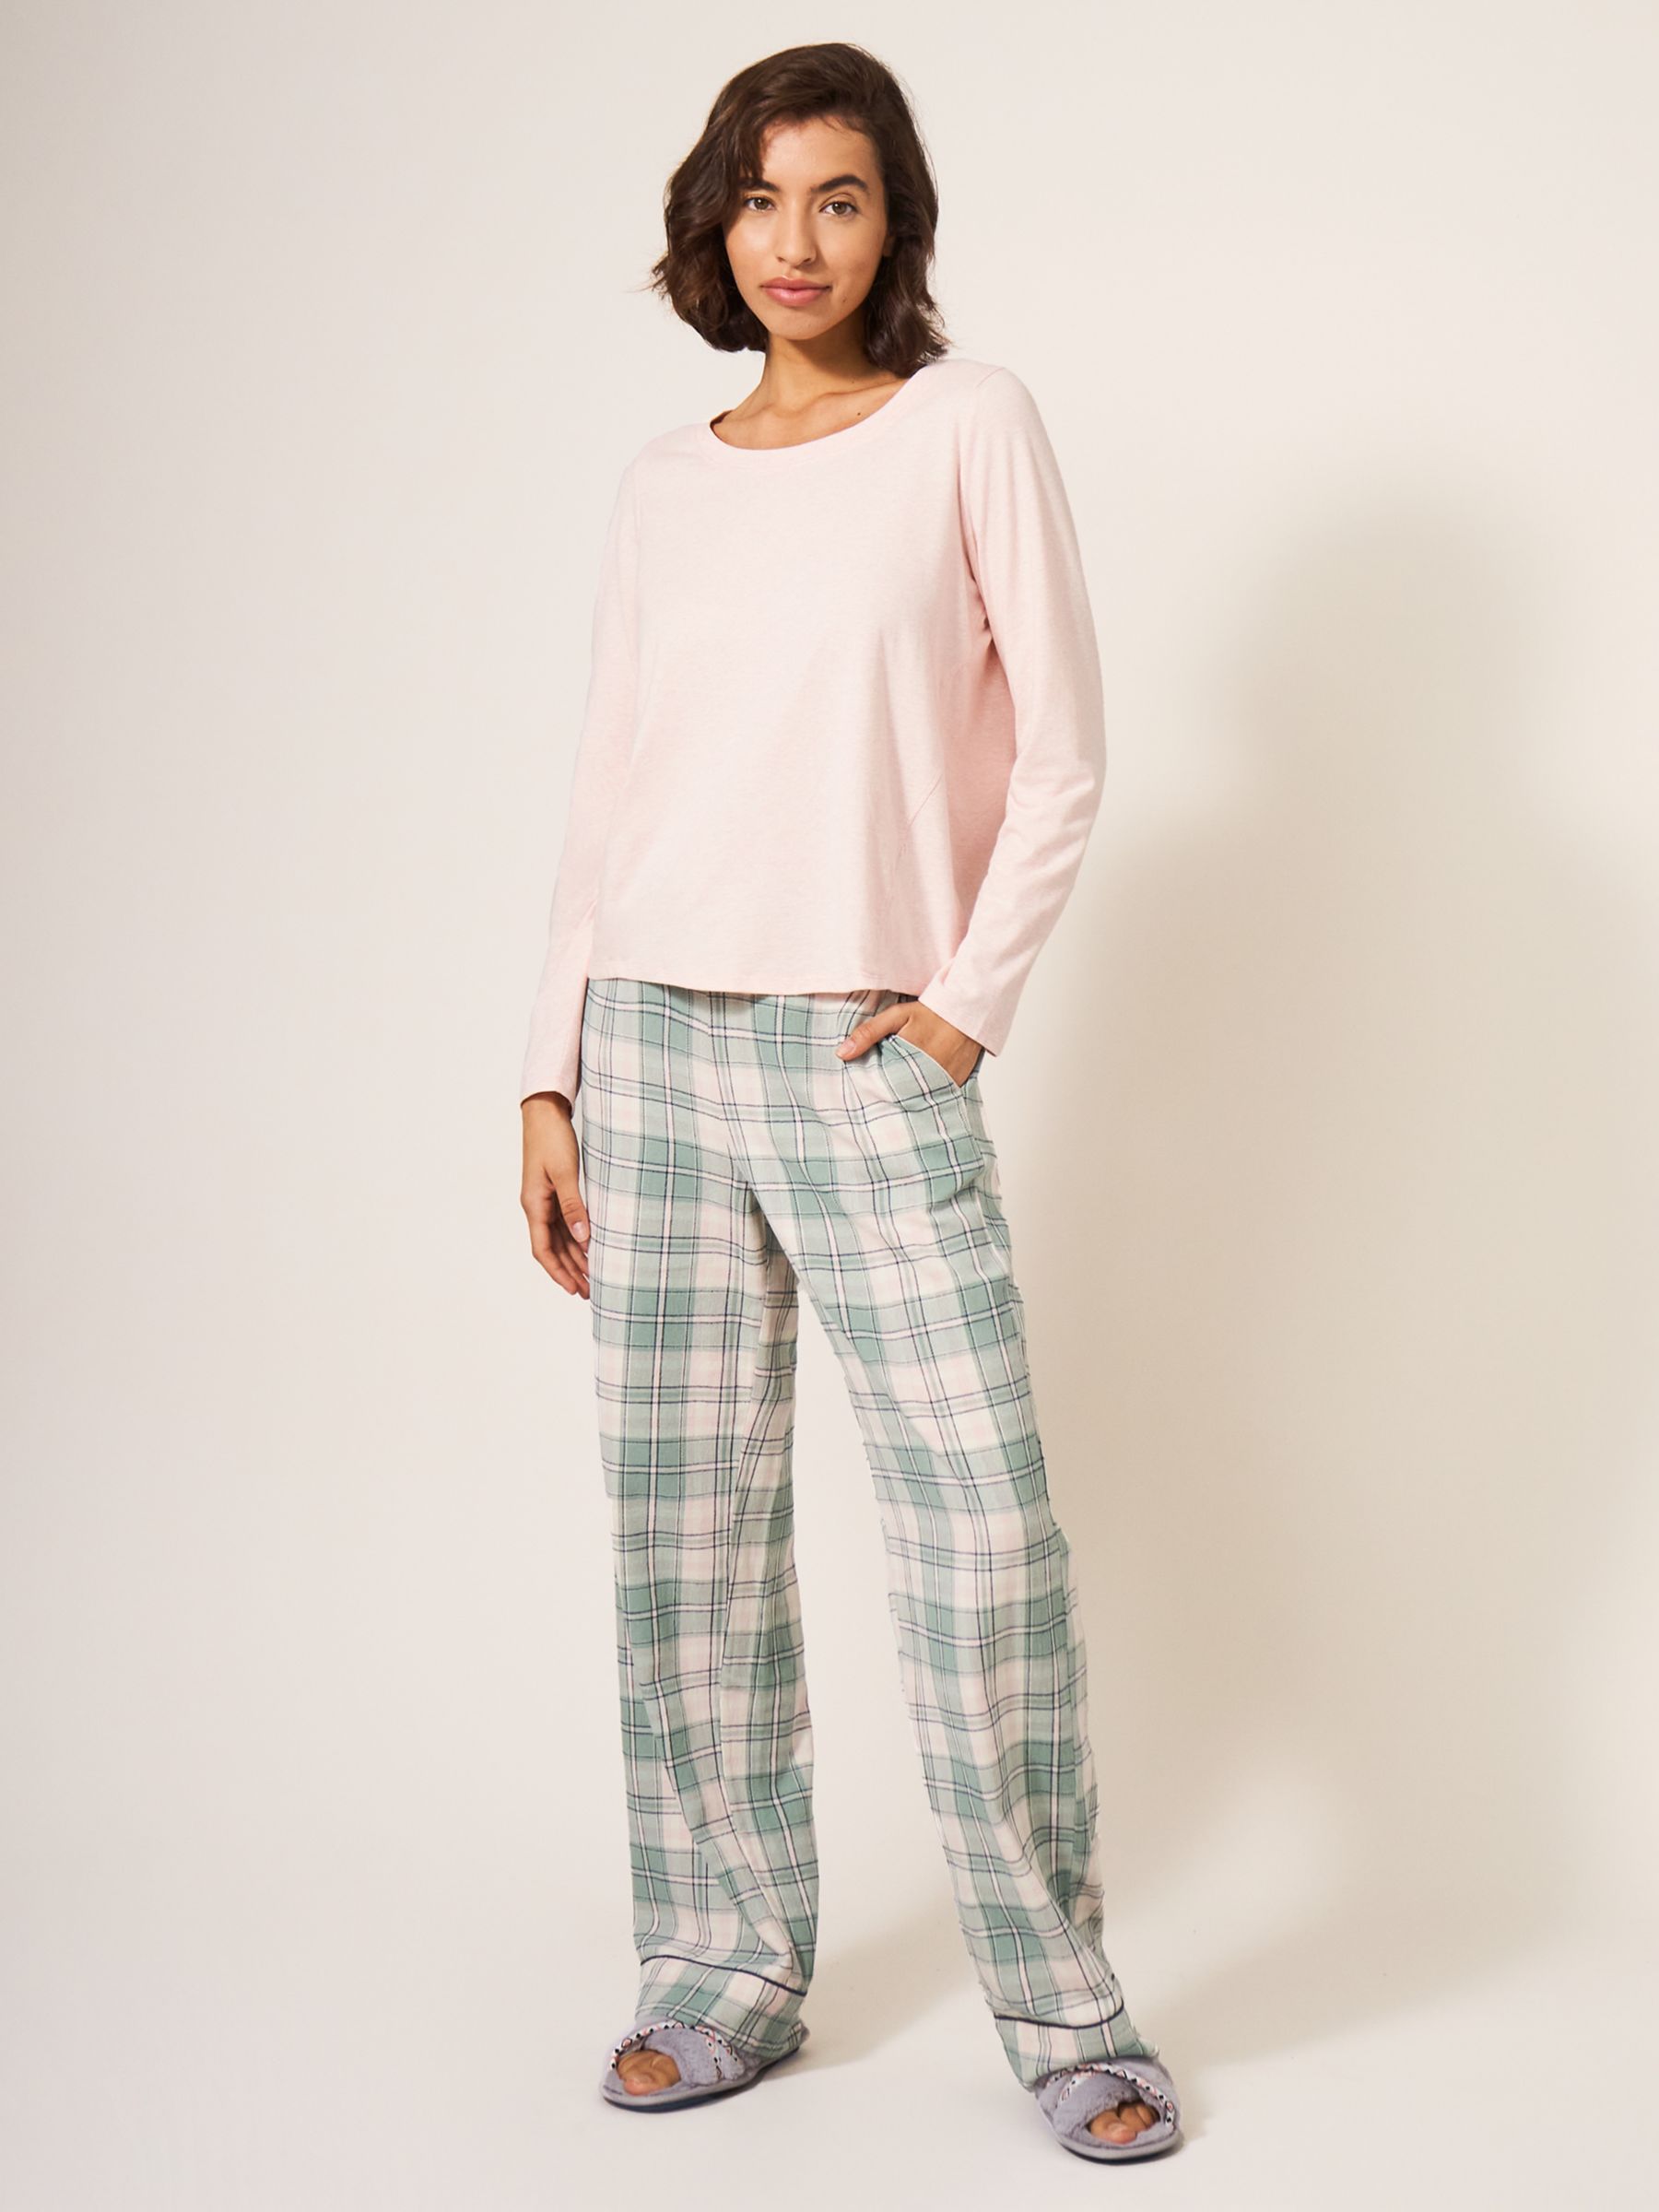 White Stuff Eva Jersey Pyjama Top, Light Pink